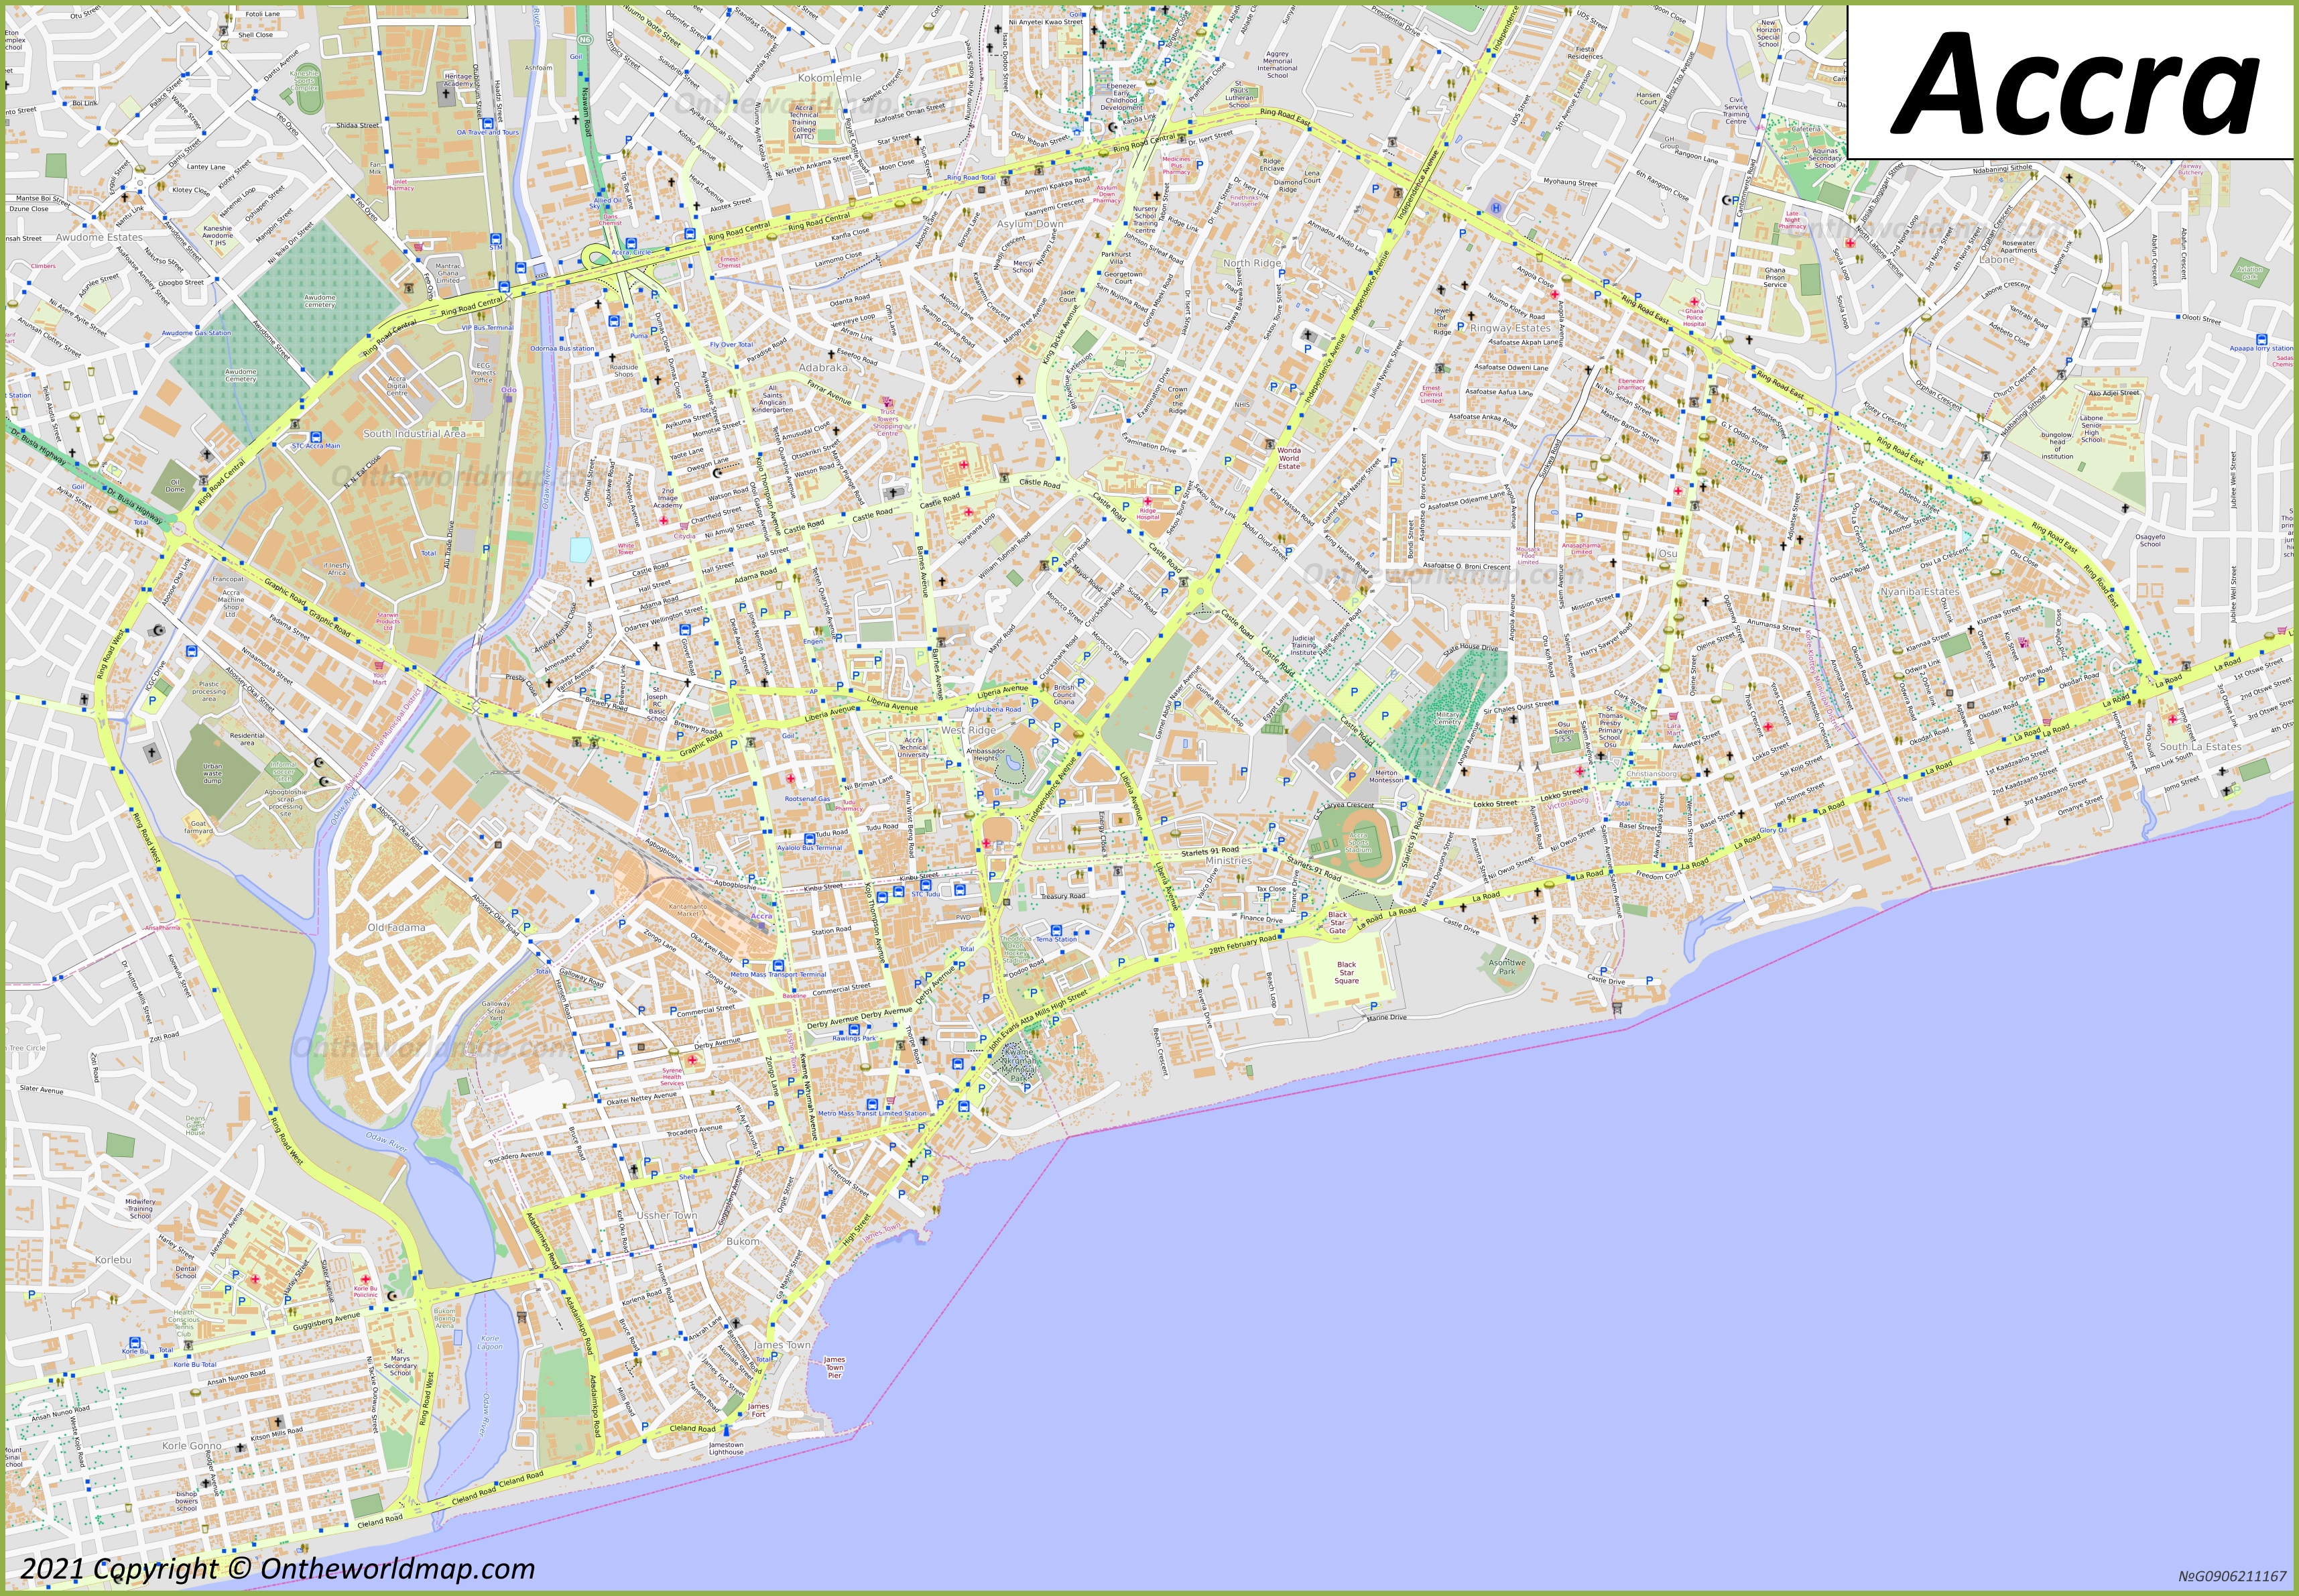 Accra City Center Map